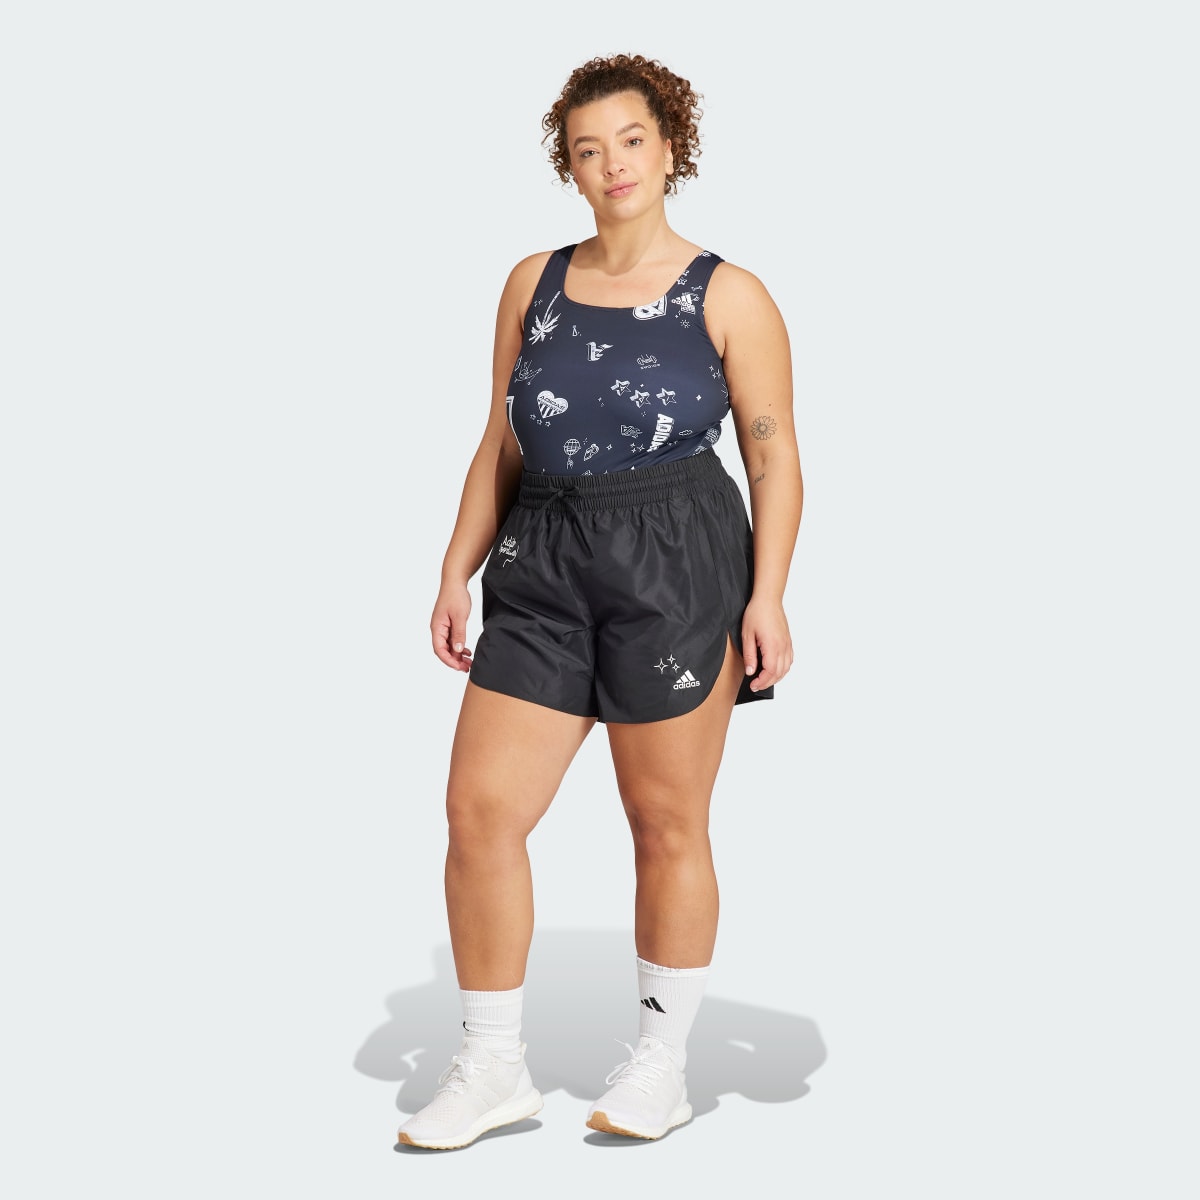 Adidas Brand Love Franchise Swimsuit (Plus Size). 7